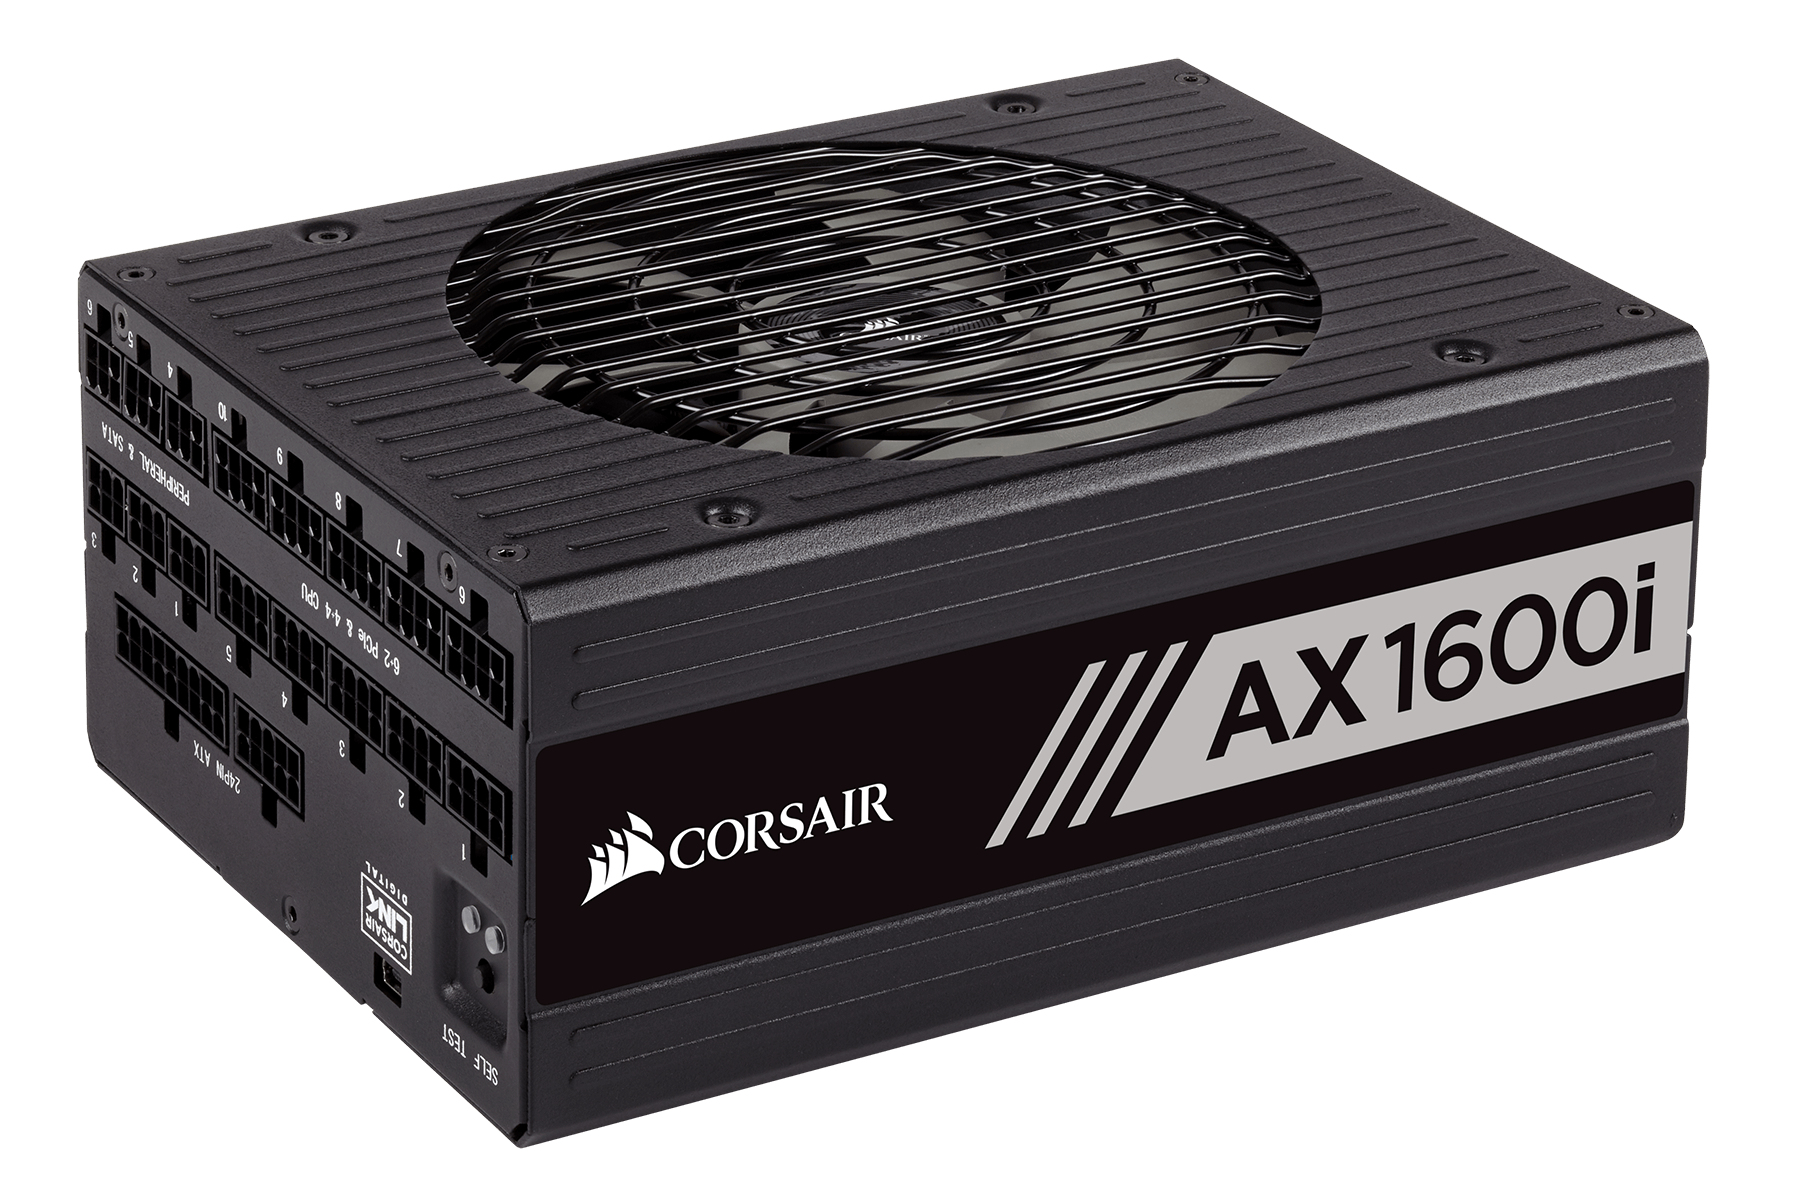  AX1600i Digital ATX Power Supply